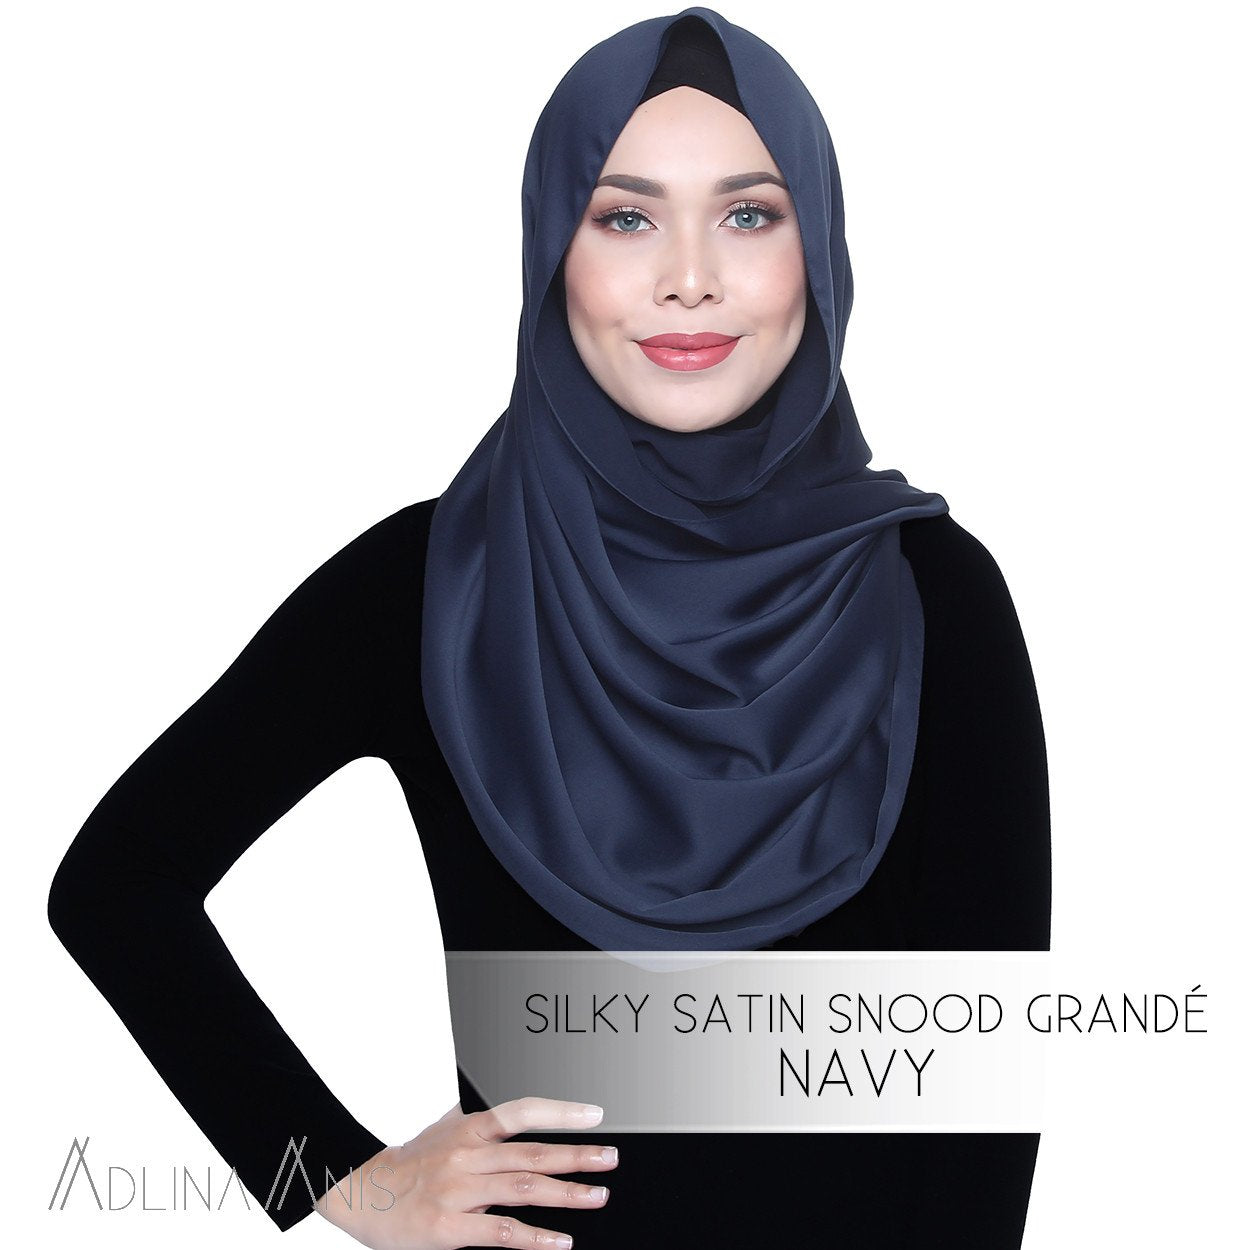 Silky Satin Snood Grande - Navy - Snoods Grande - Adlina Anis - Third Culture Boutique